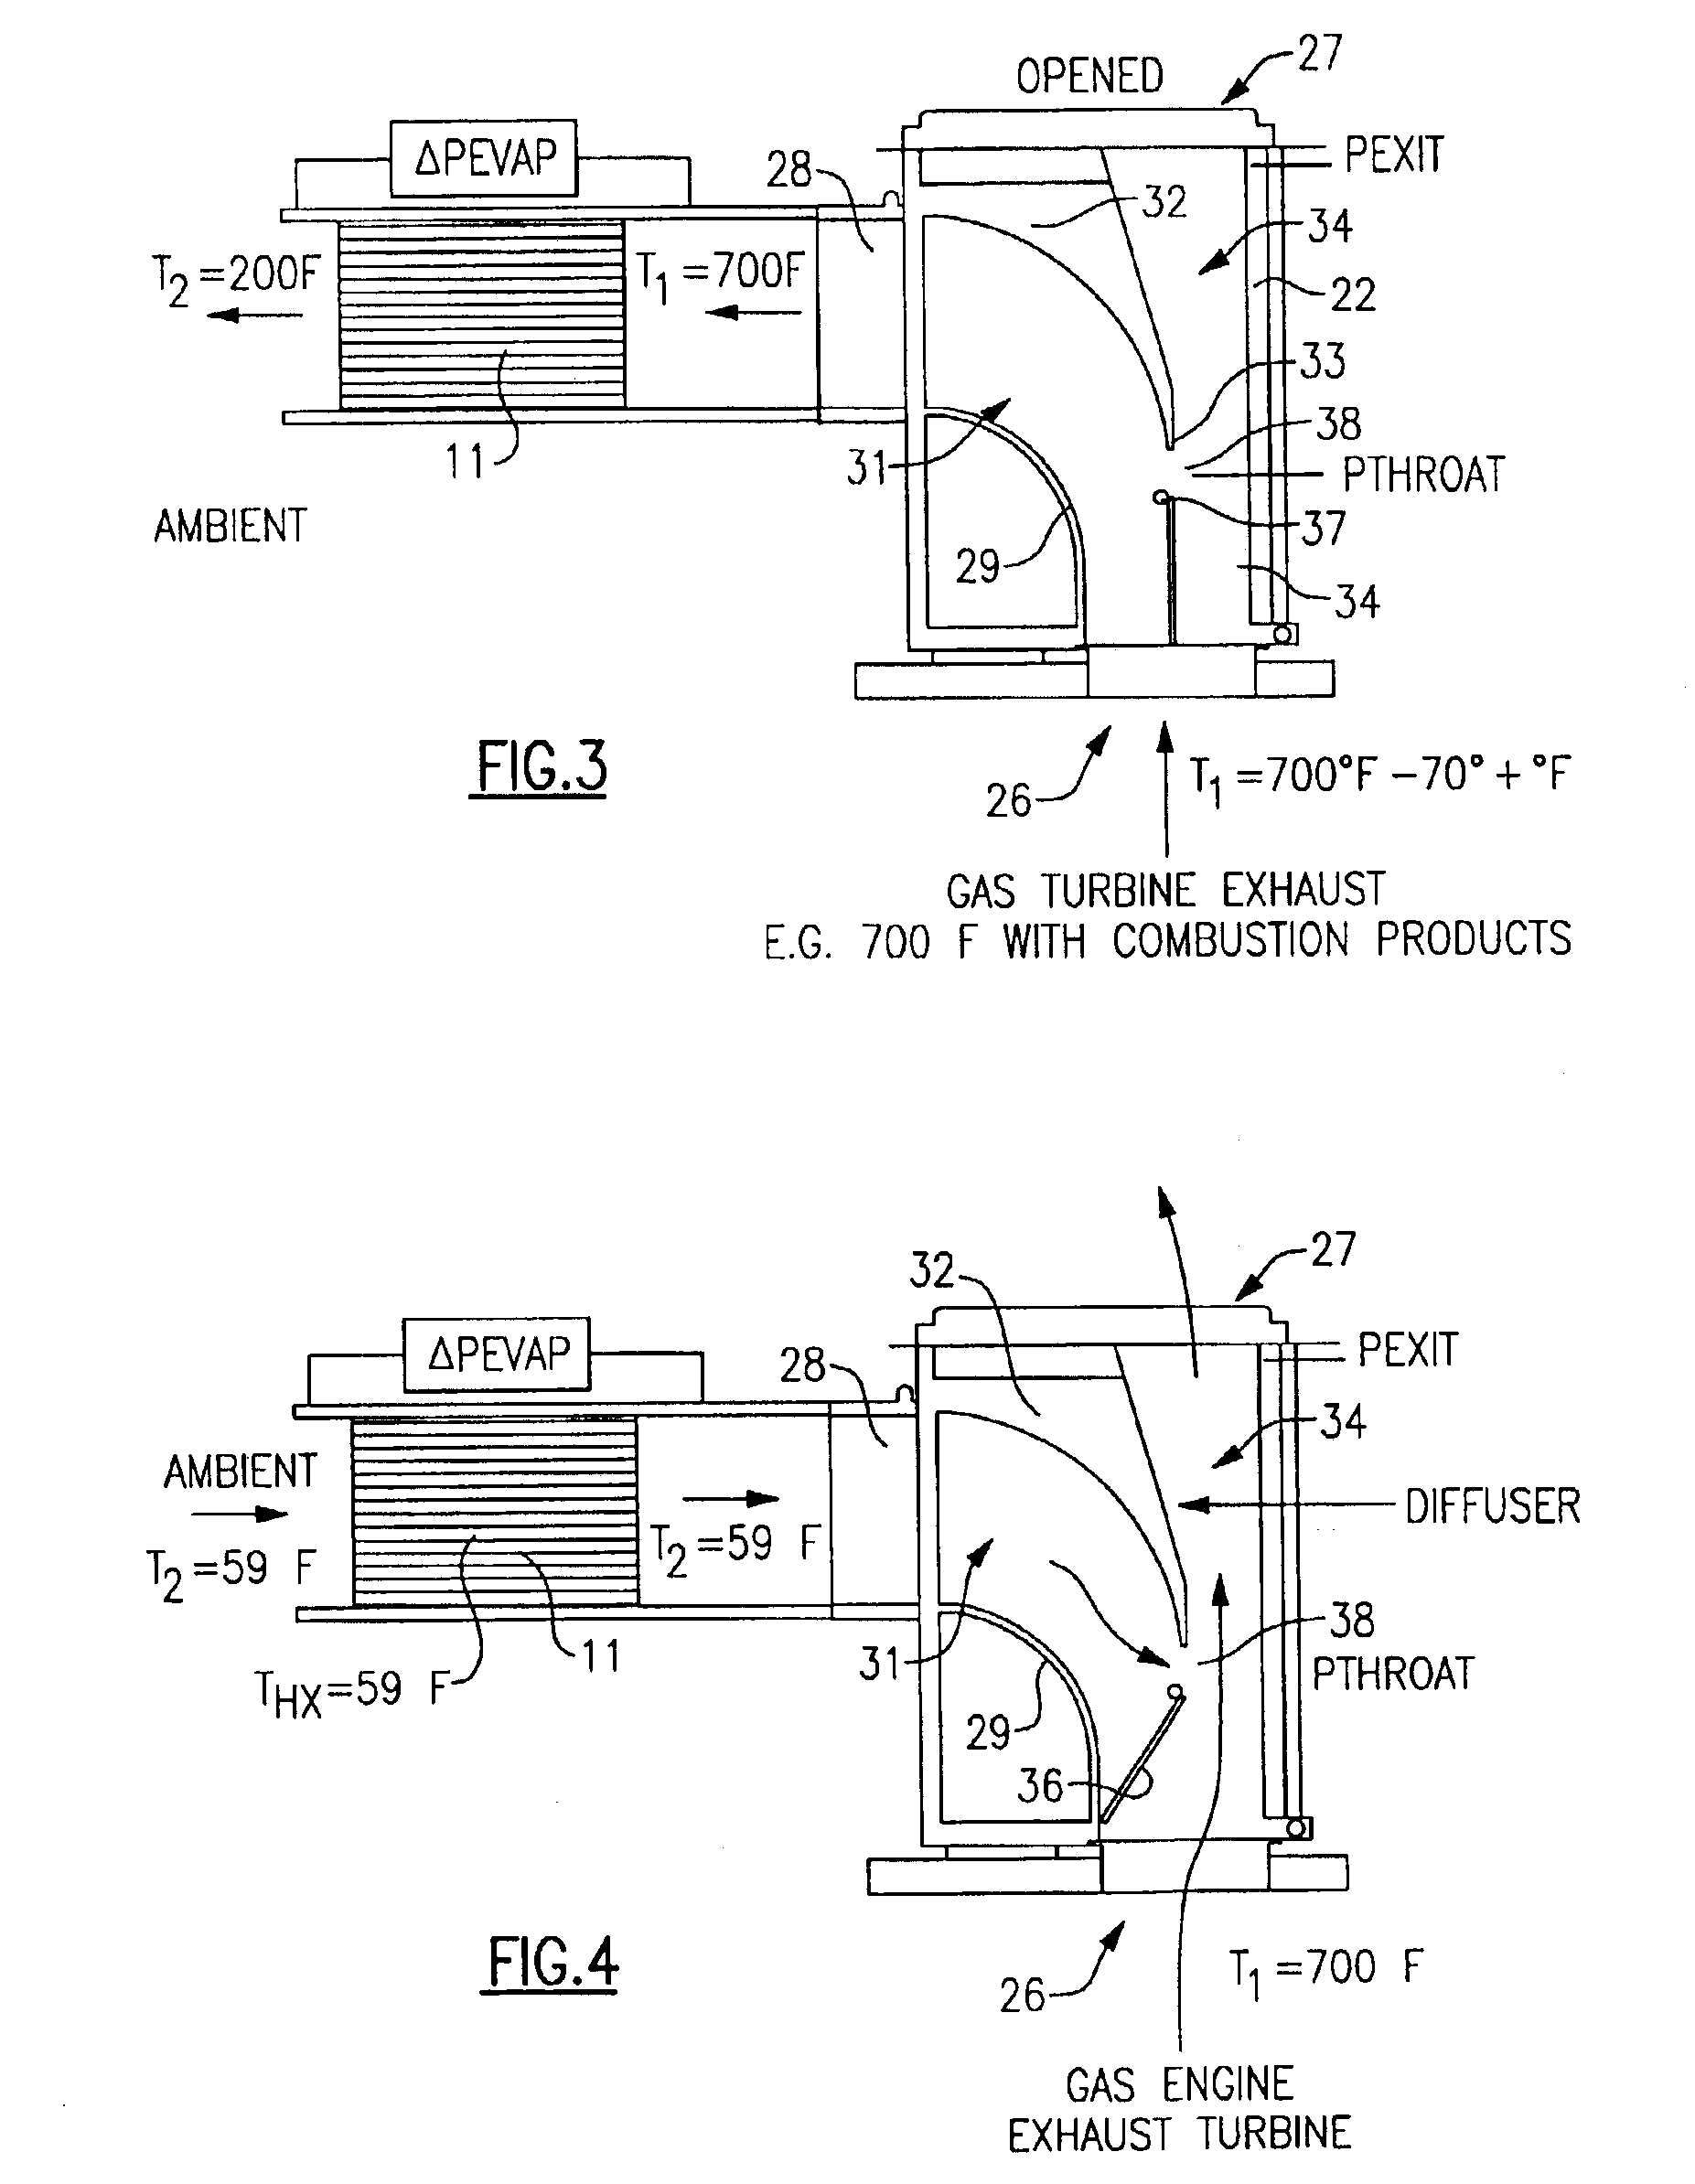 Control of flow through a vapor generator